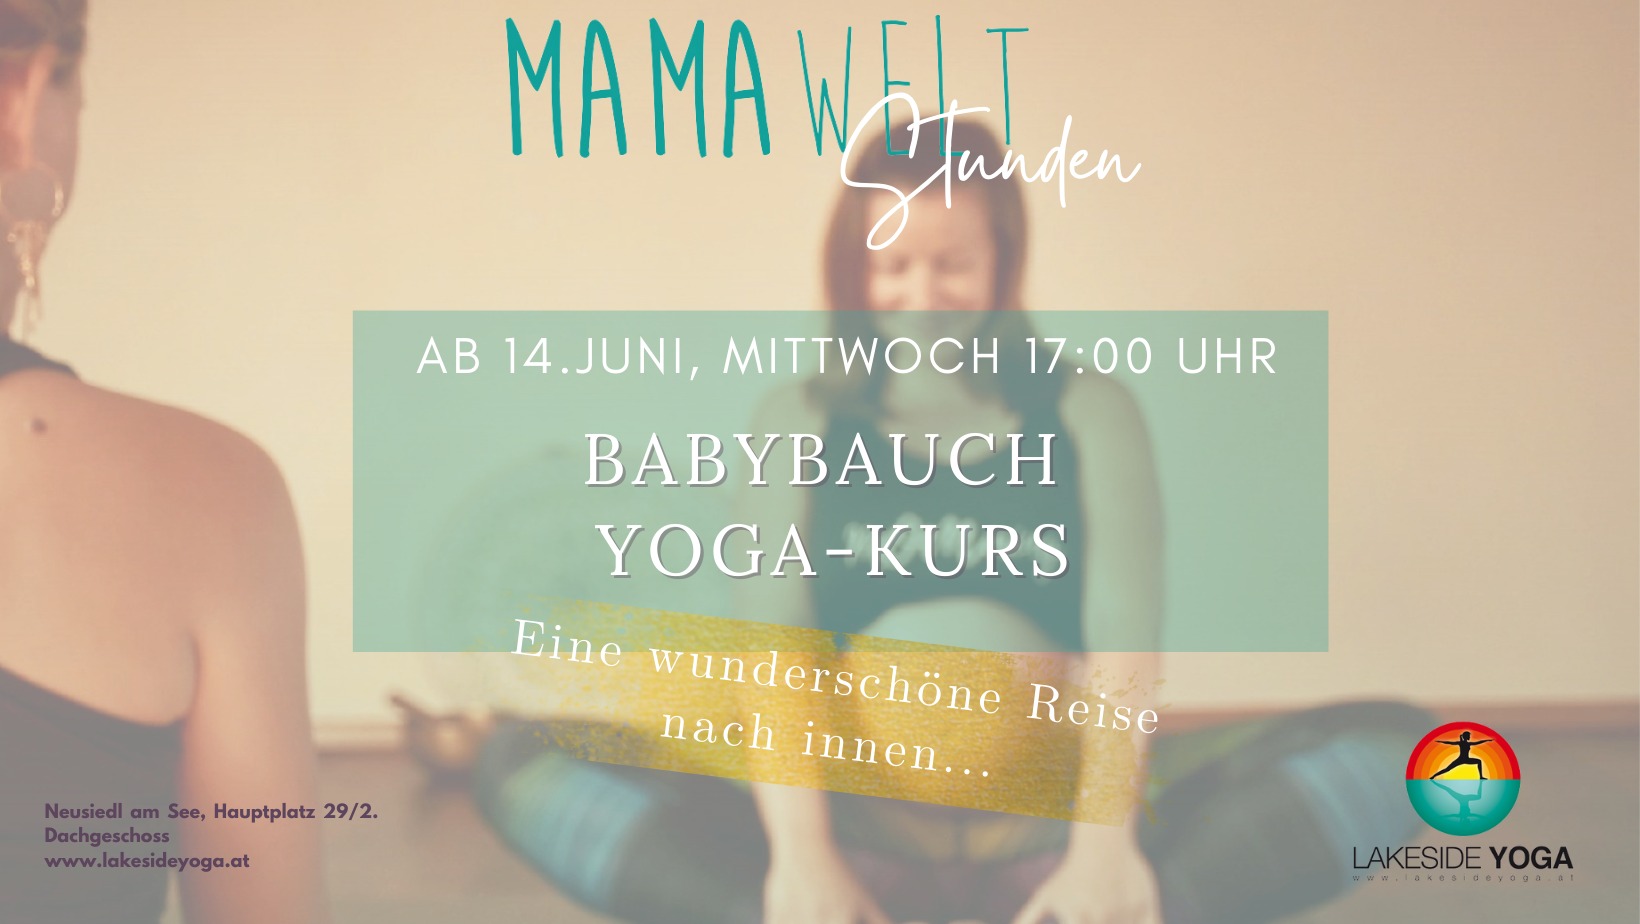 Babybauch Yoga-Kurs ab 5/7 Mittwoch um 17:00